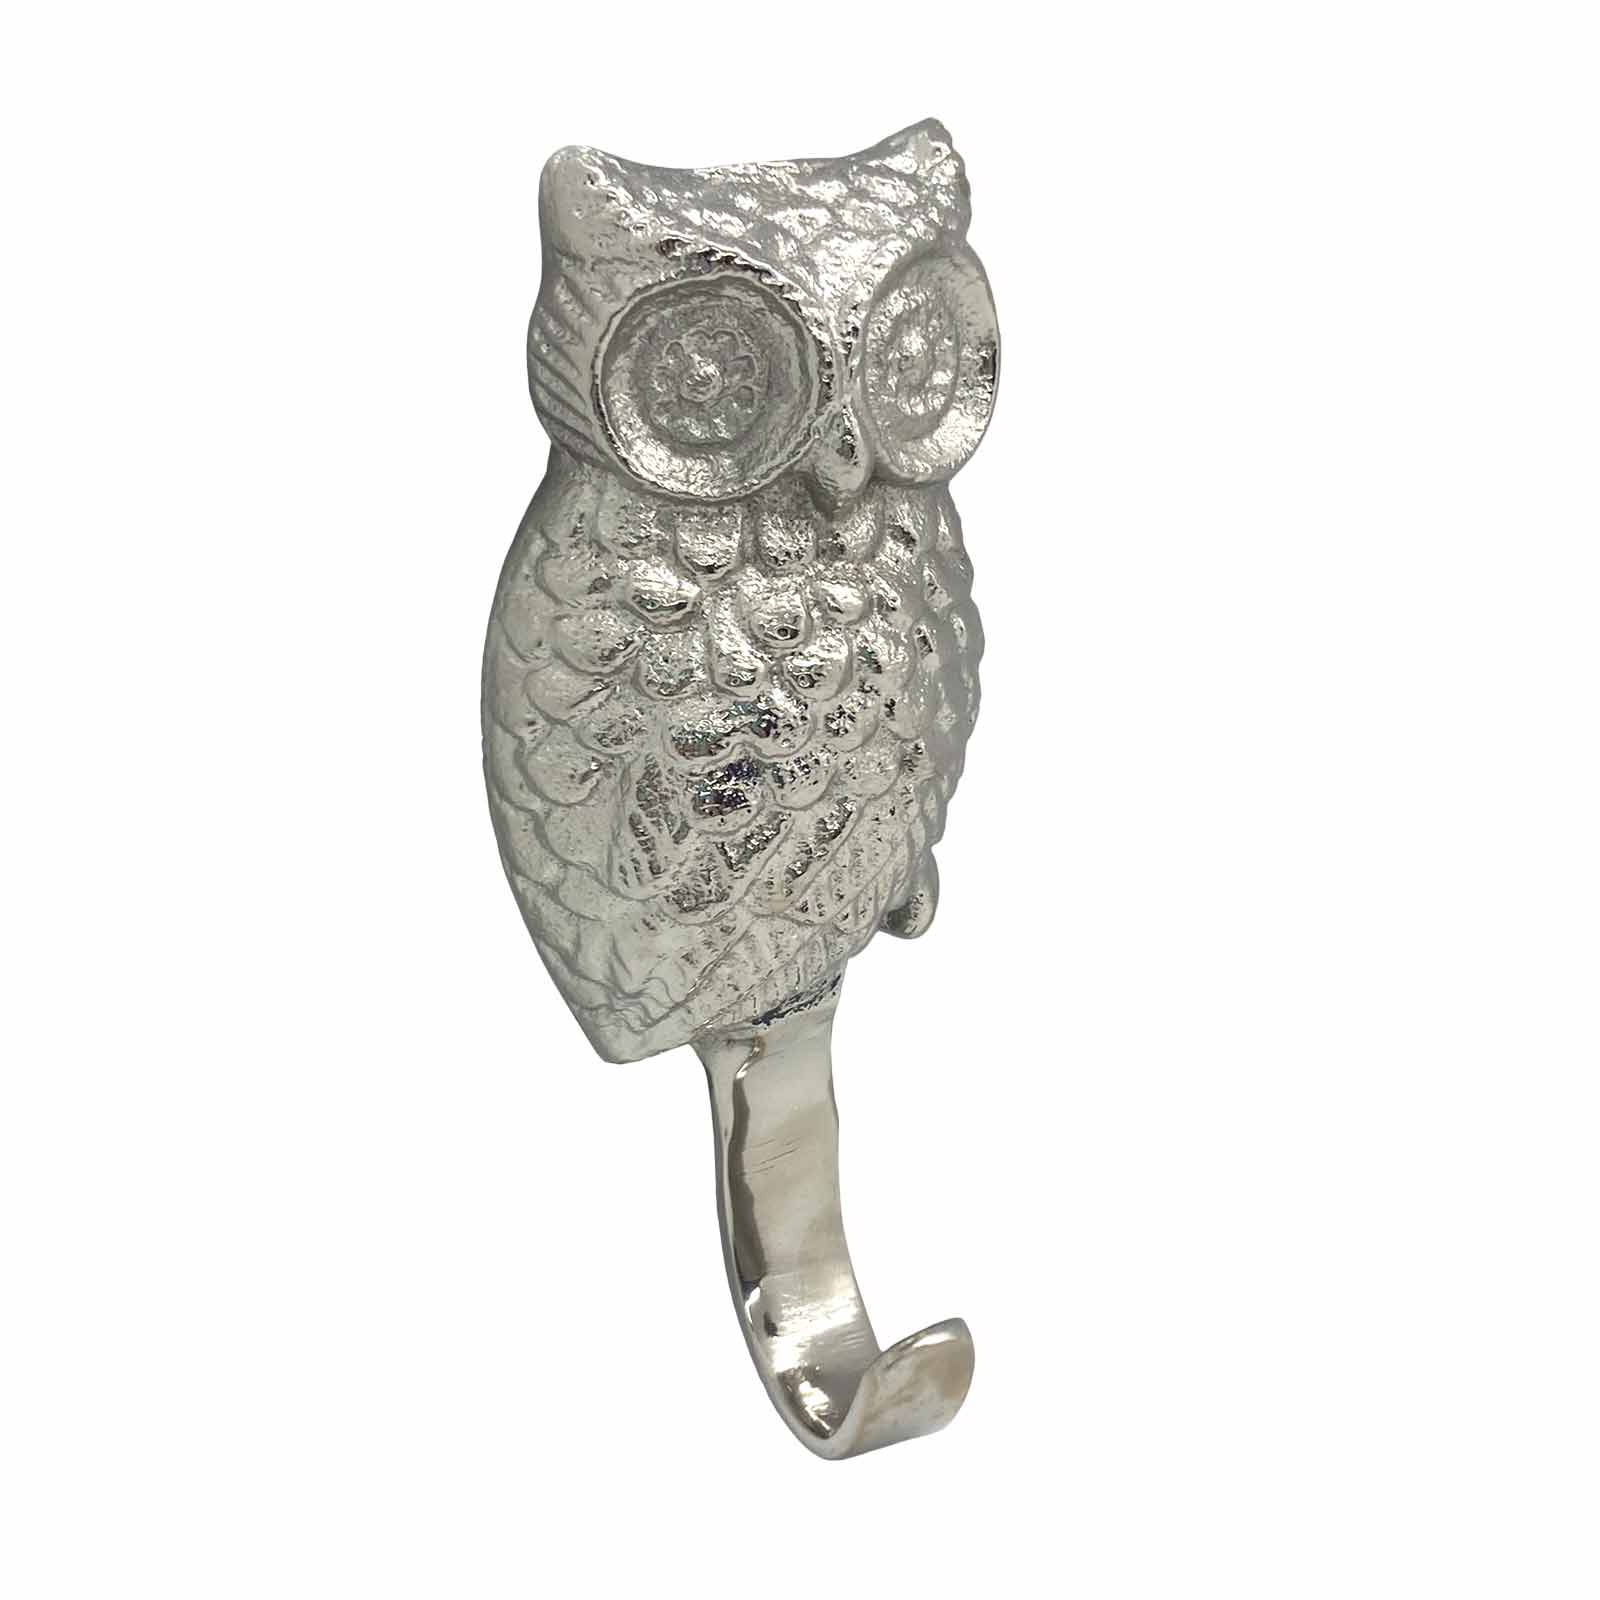 Metal Owl Wall Hook - Silver